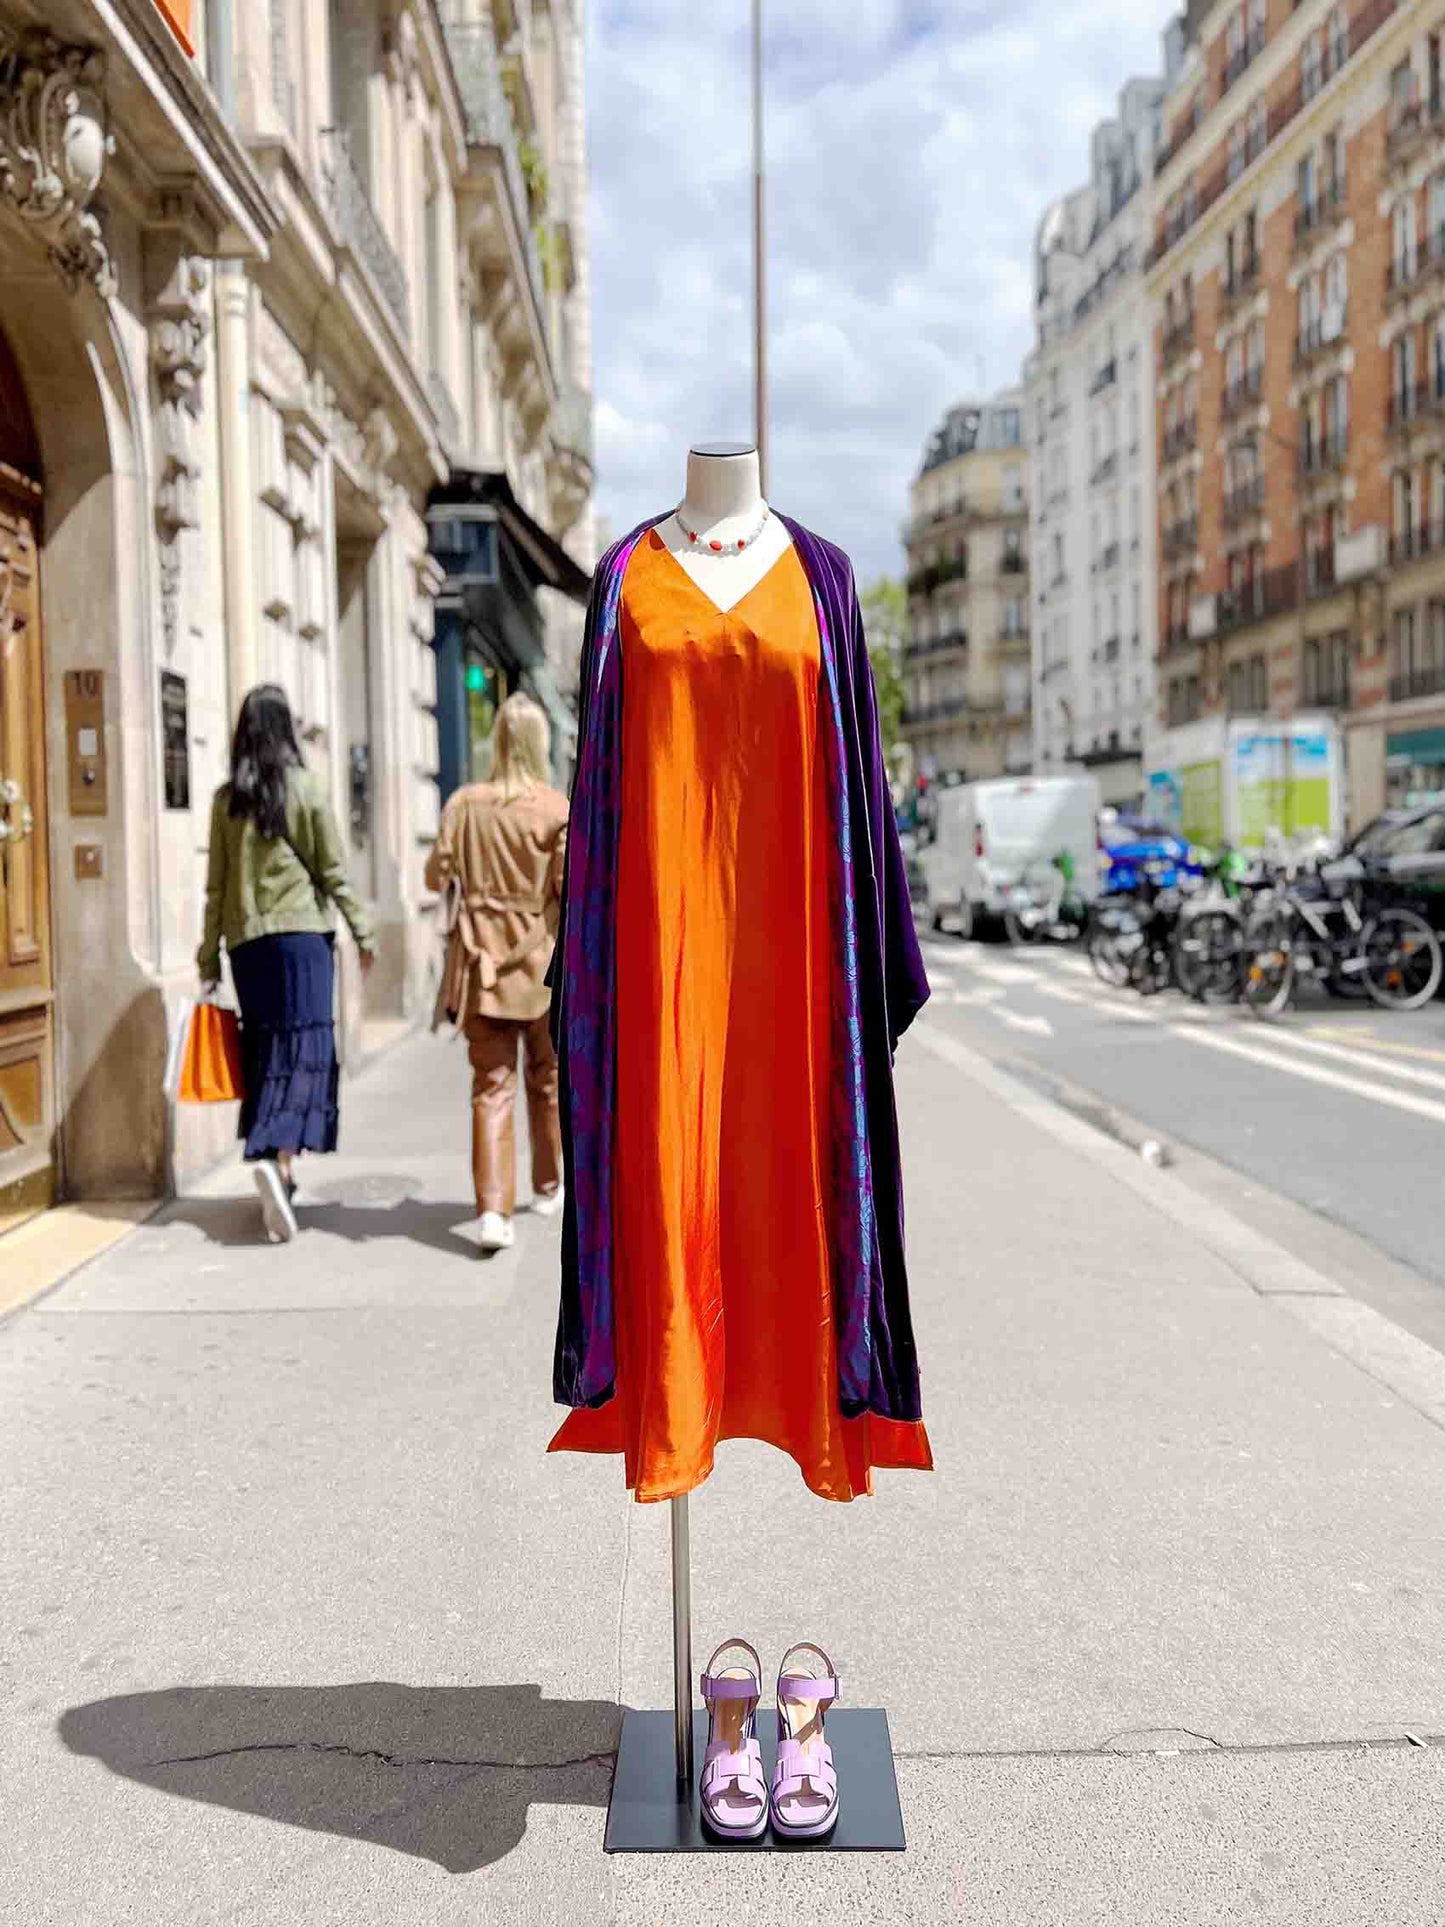 Magenta Simple Silk Dress